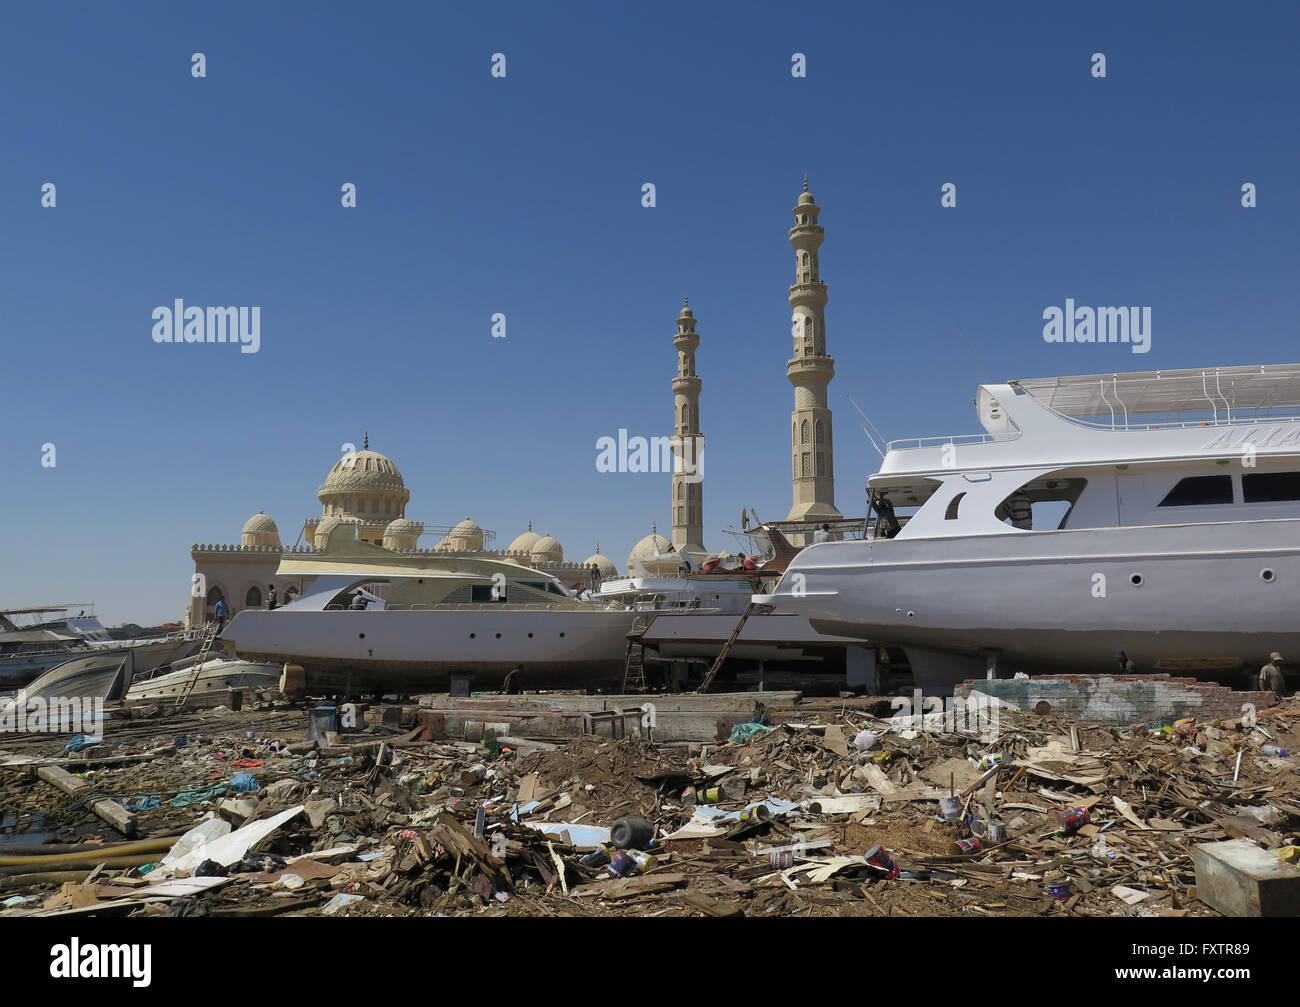 Schiffbau, Hafen, Aldahaar Moschee, Hurghada, Aegypten ha Foto Stock